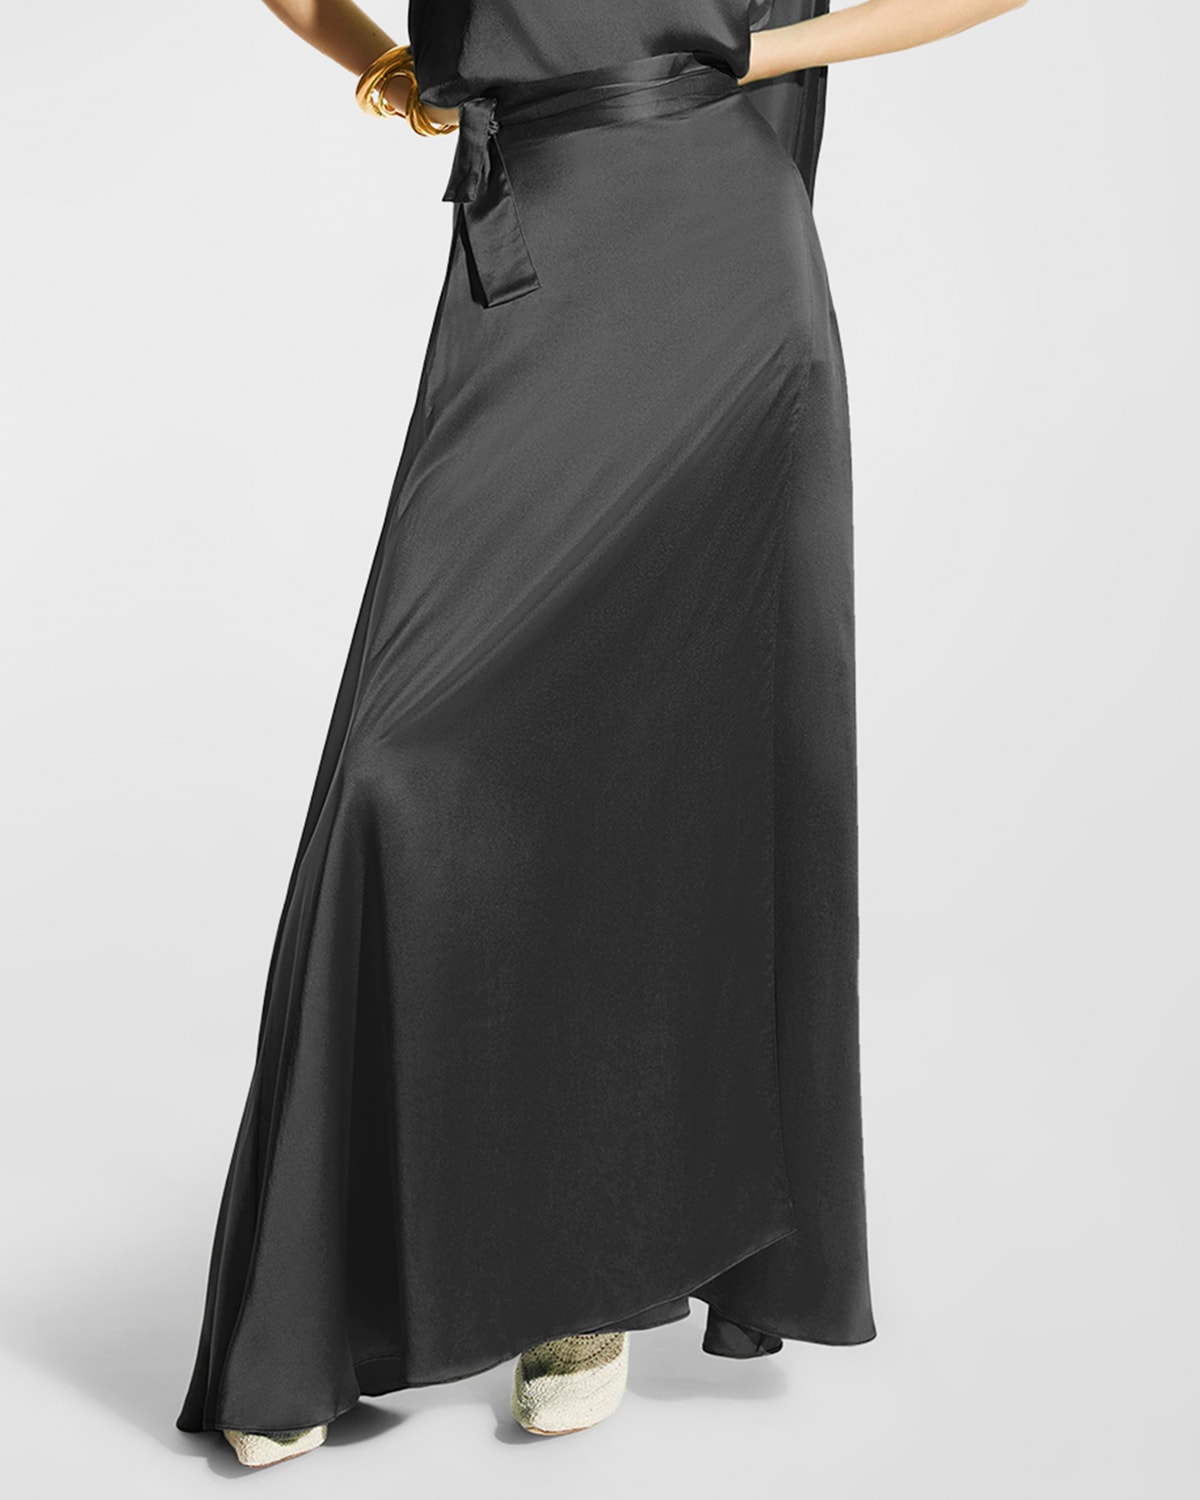 CARESTE Zara A-Line Silk Maxi Skirt